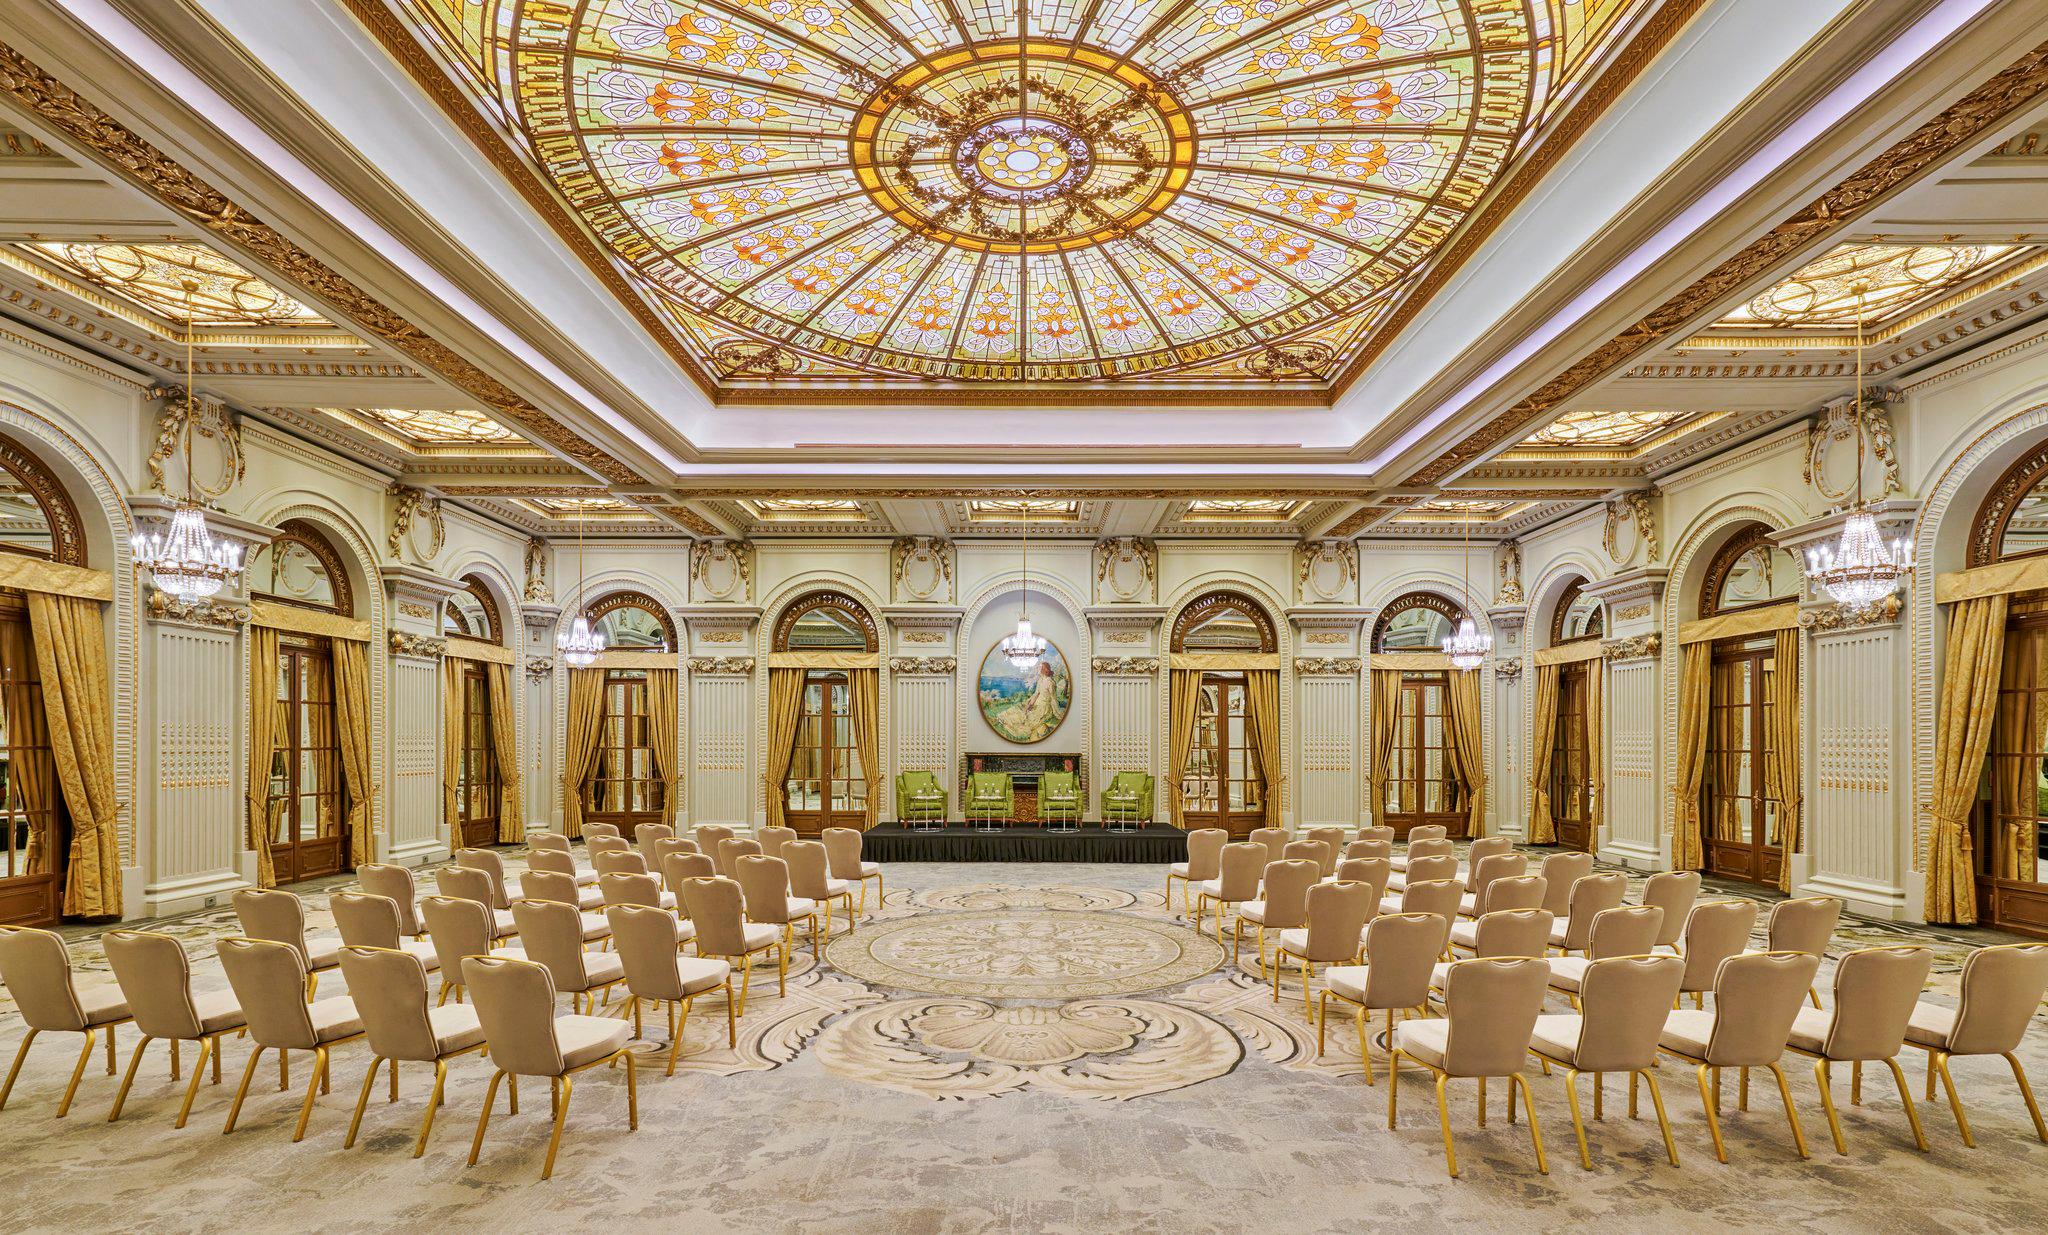 Images InterContinental Athénée Palace Bucharest, an IHG Hotel